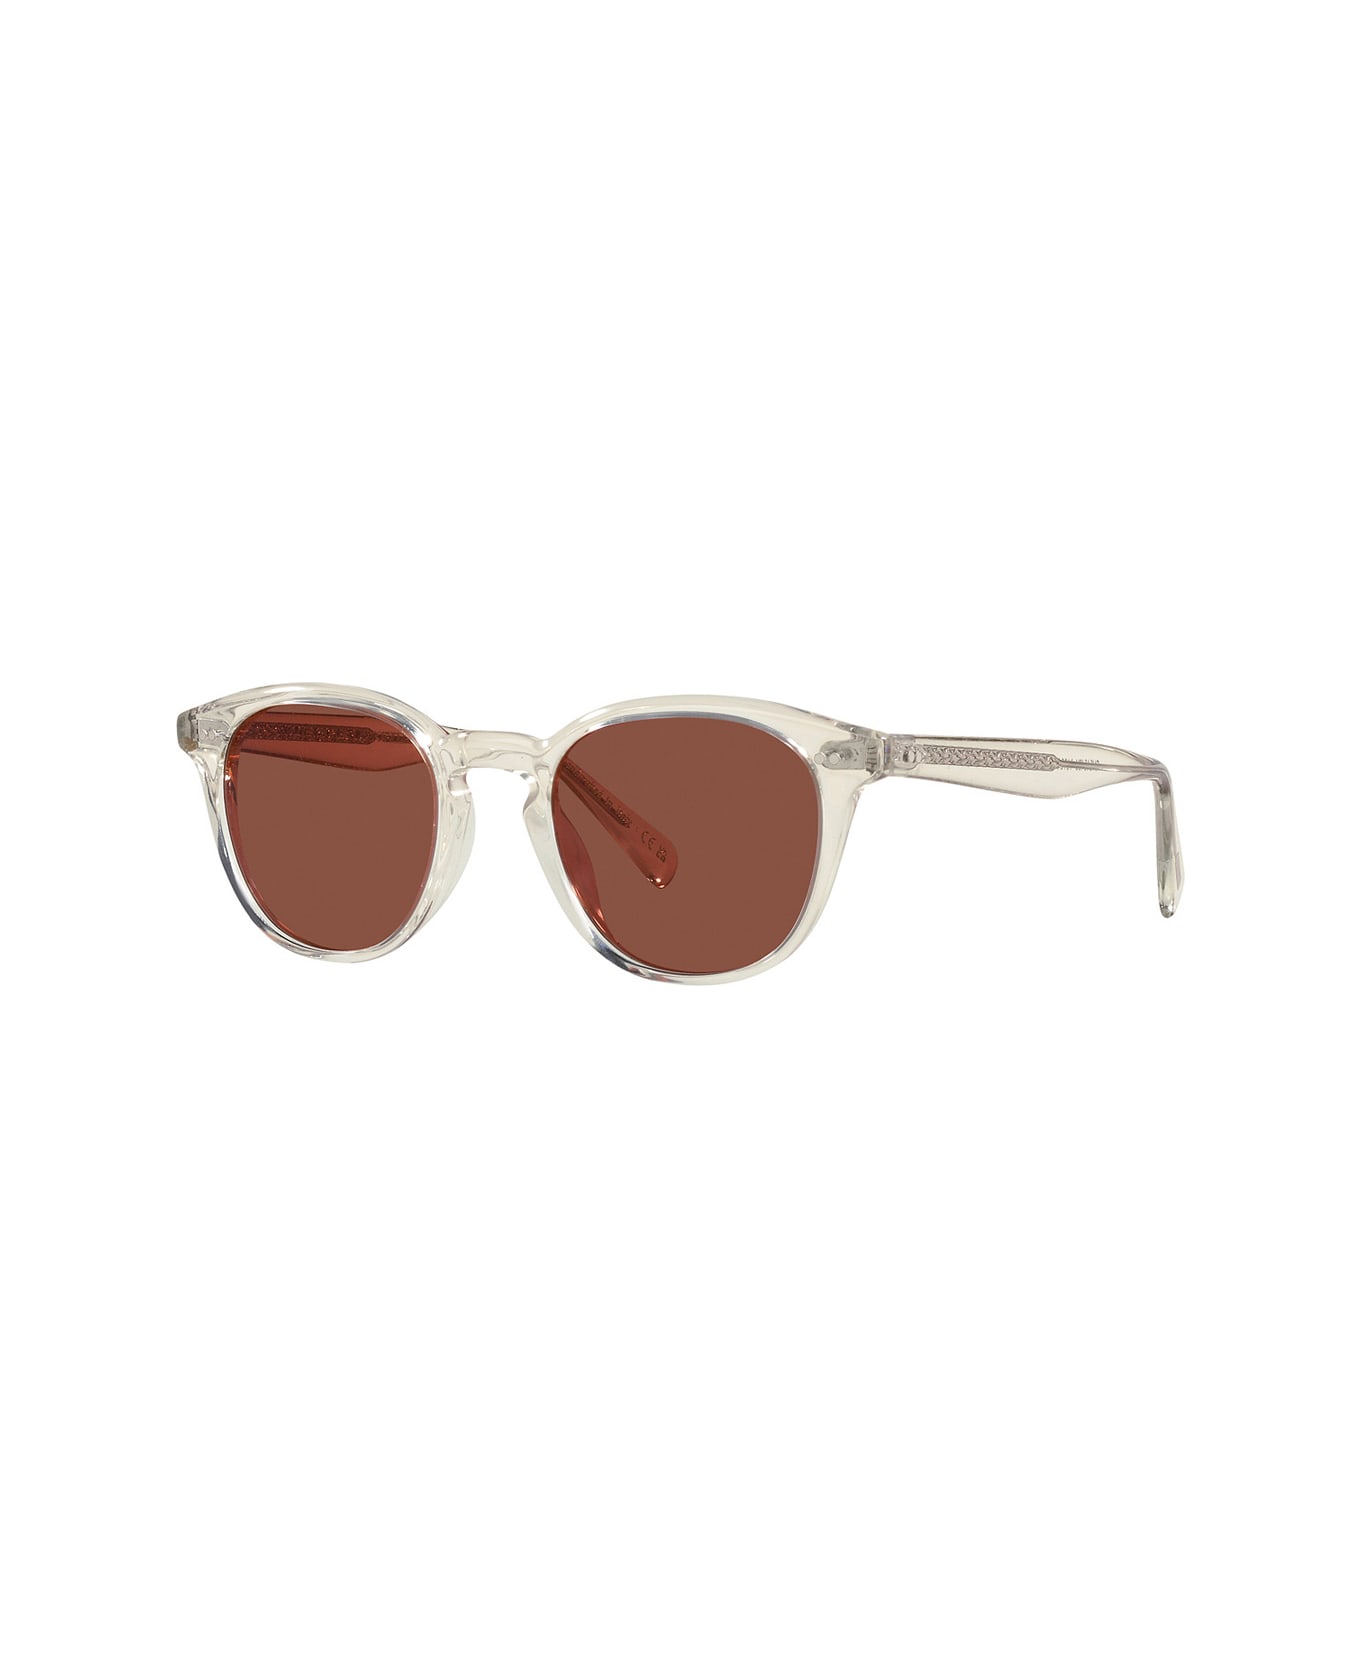 Oliver Peoples Ov5454su 1692c5 Sunglasses - Trasparente サングラス